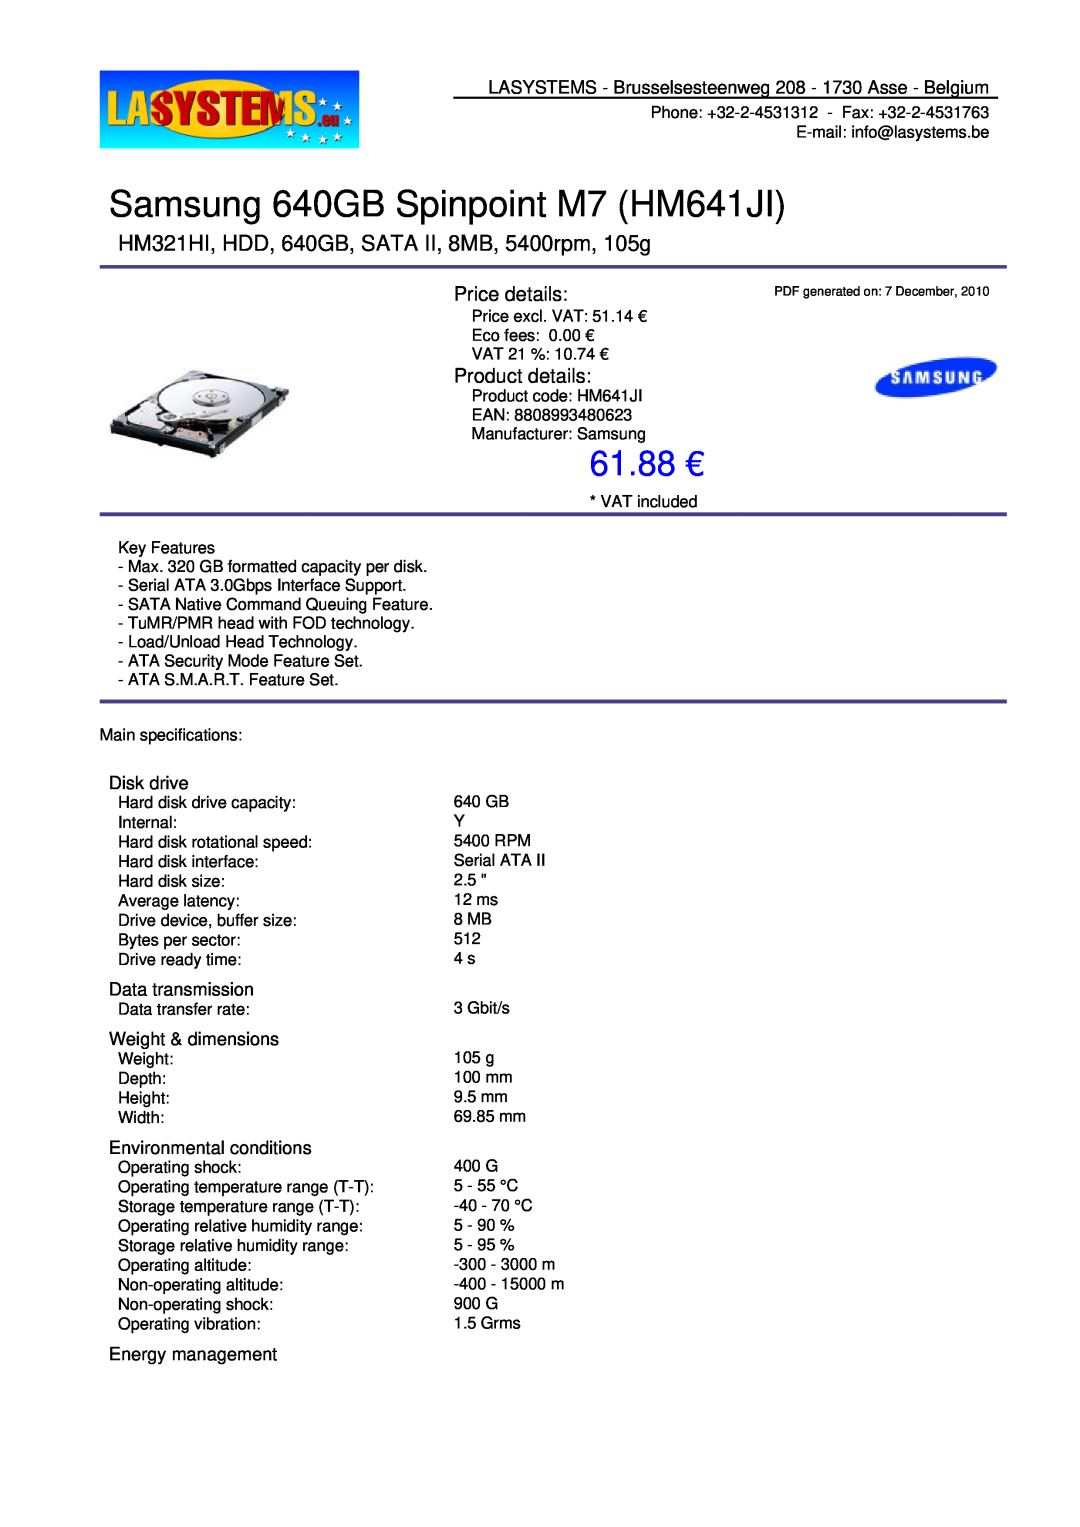 Samsung HM641JI dimensions LASYSTEMS - Brusselsesteenweg 208 - 1730 Asse - Belgium, Disk drive, Data transmission, 61.88 € 